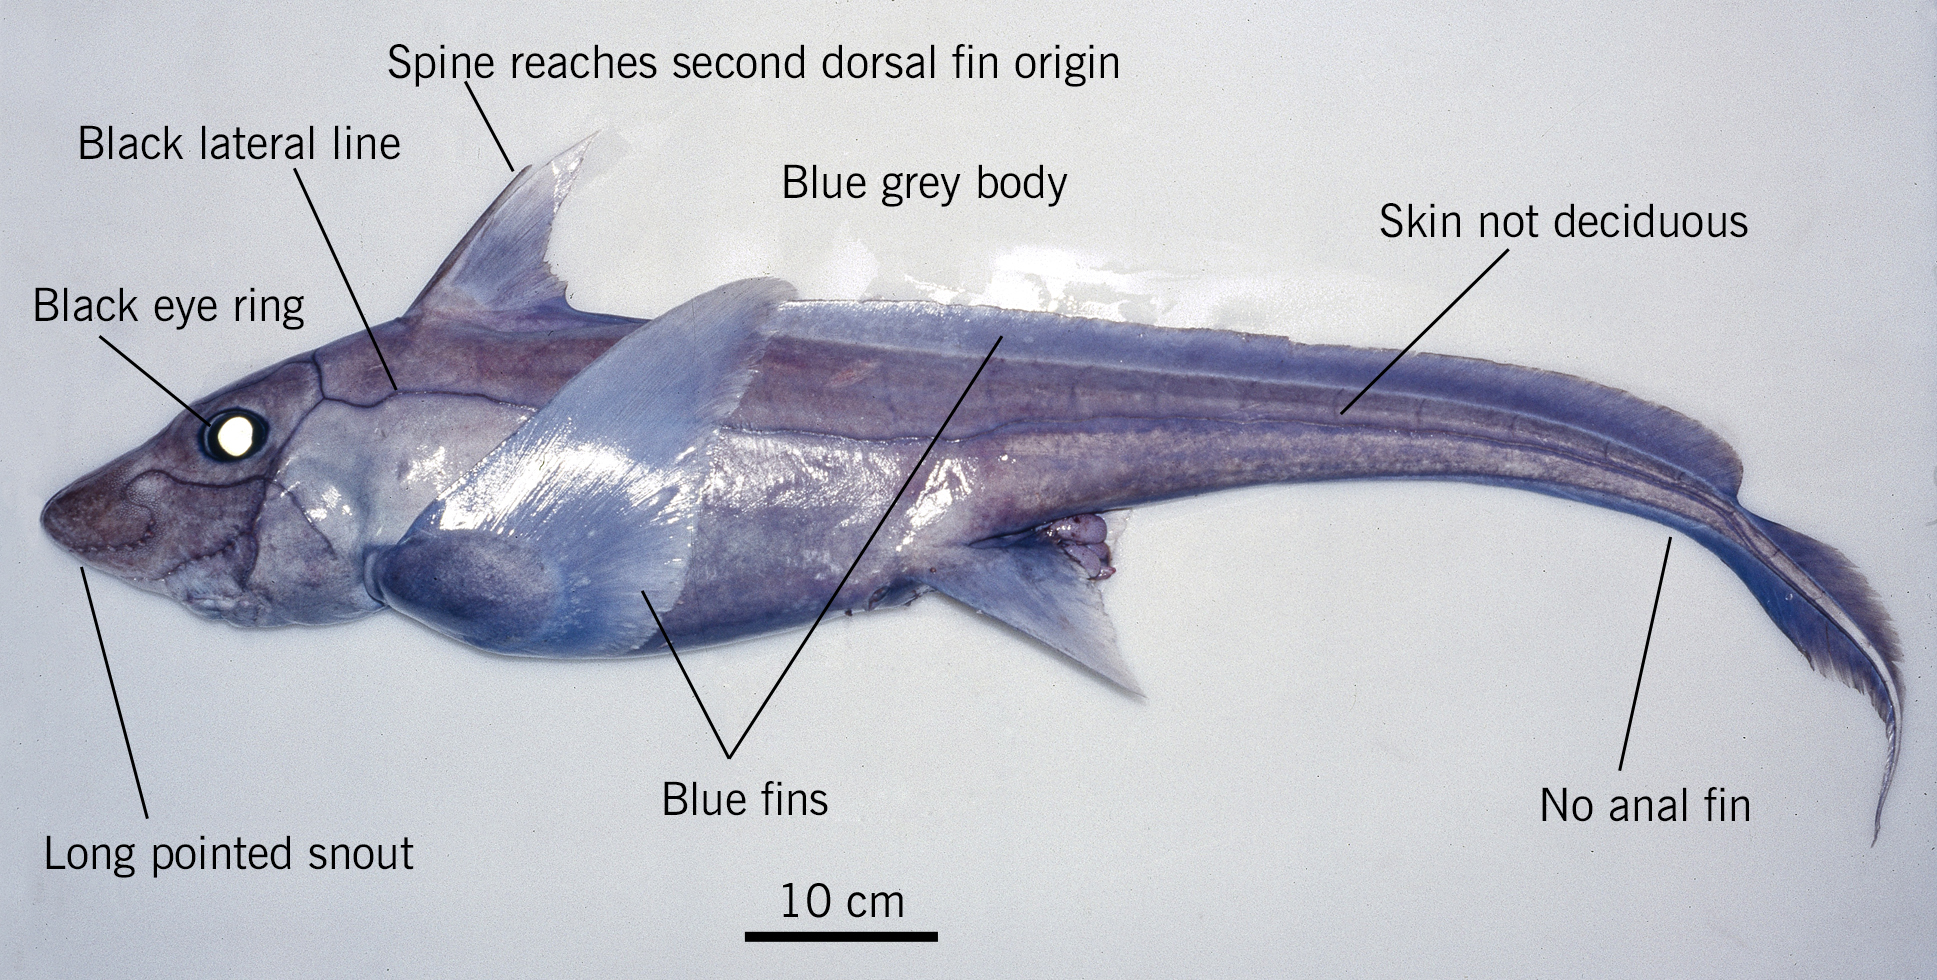 Ghost Shark Animal: A Unique Fish Species